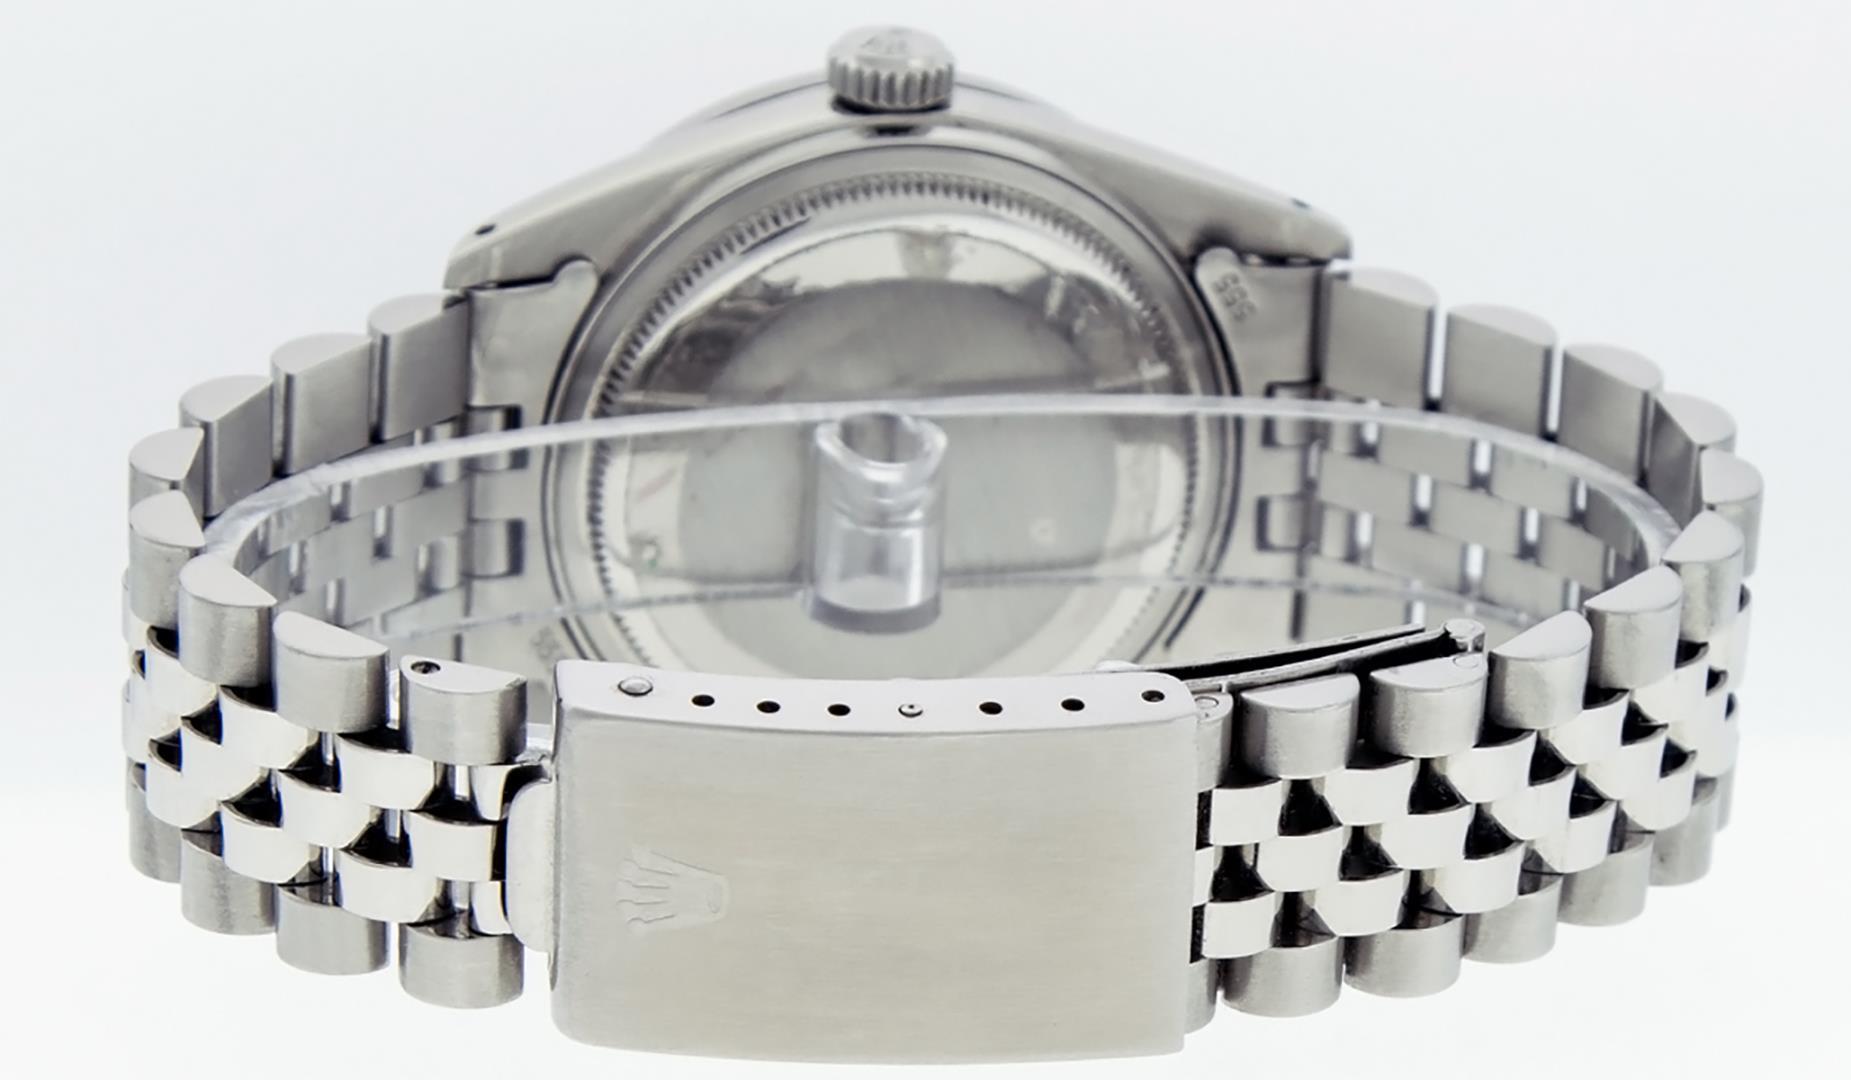 Rolex Mens Stainless Steel Diamond Datejust Wristwatch